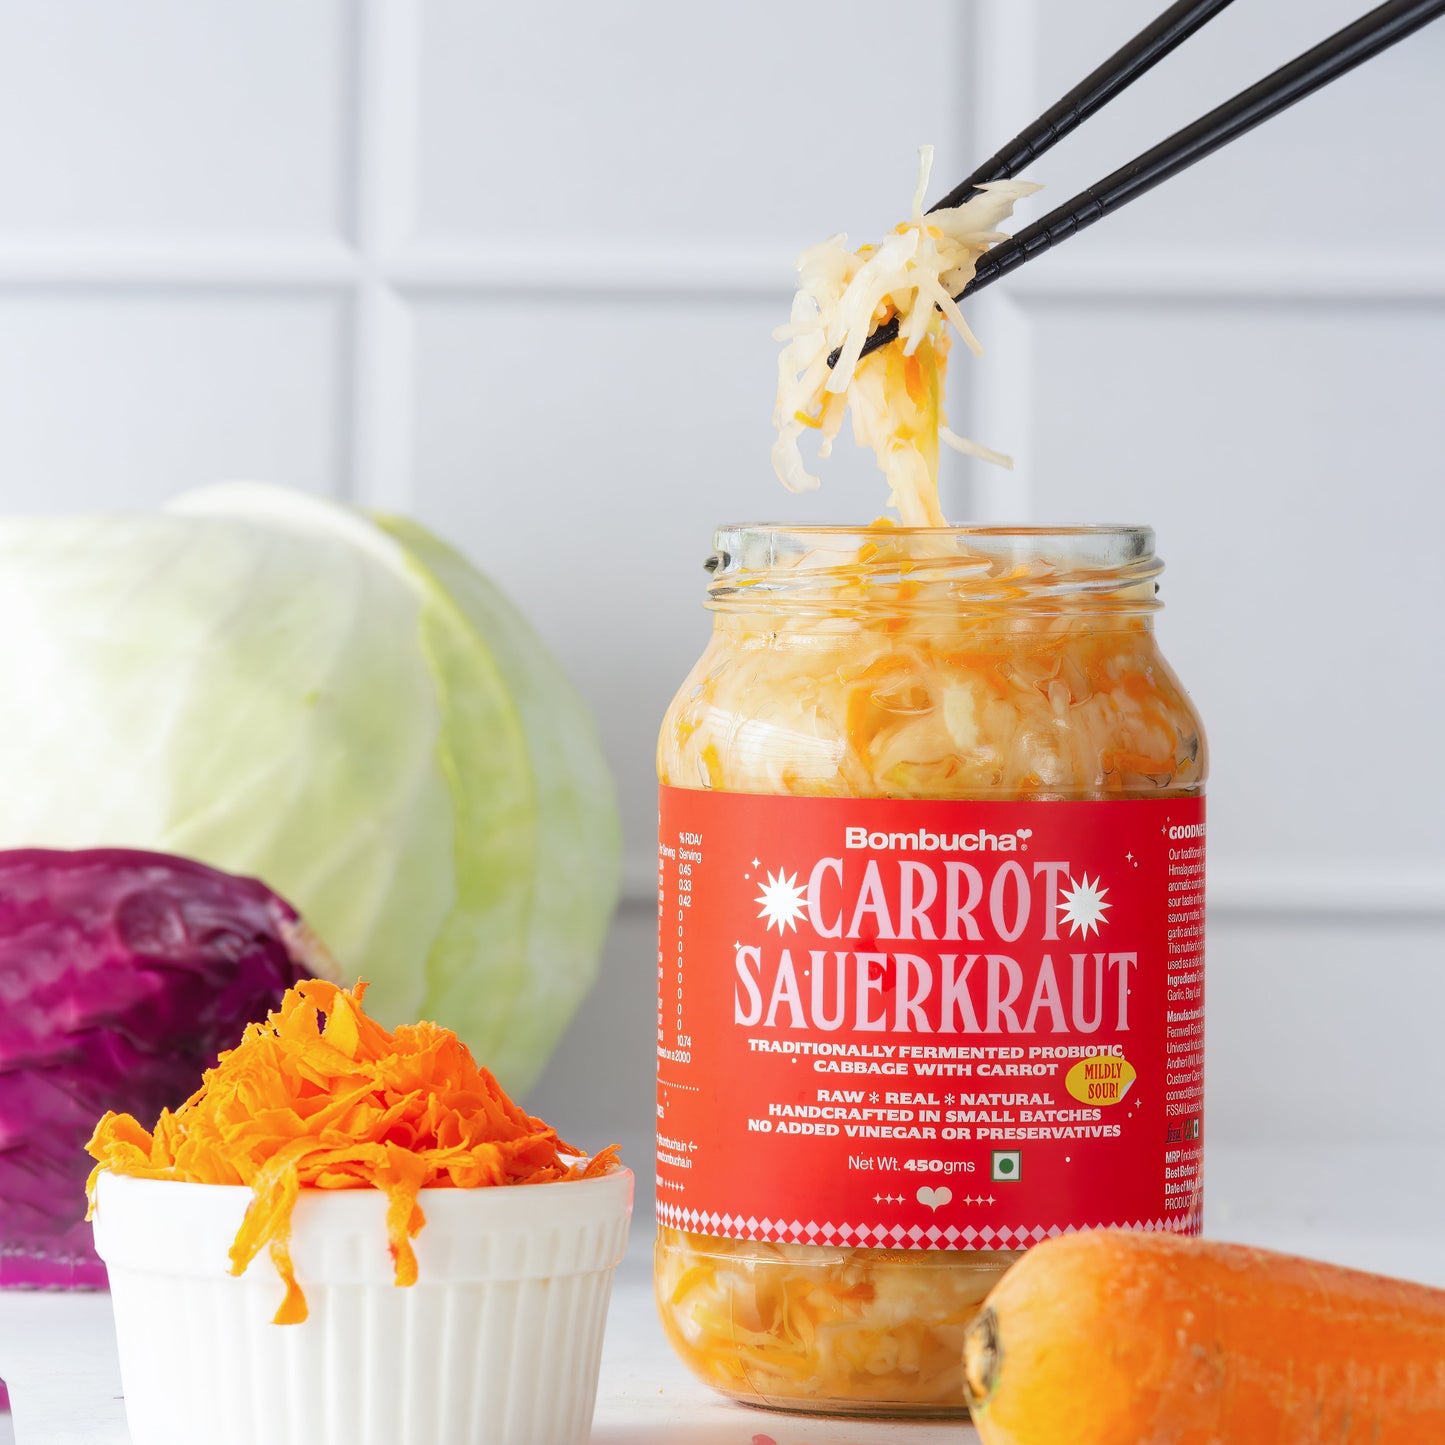 Sauerkraut-Carrot & Cabbage  450gm (NCR)